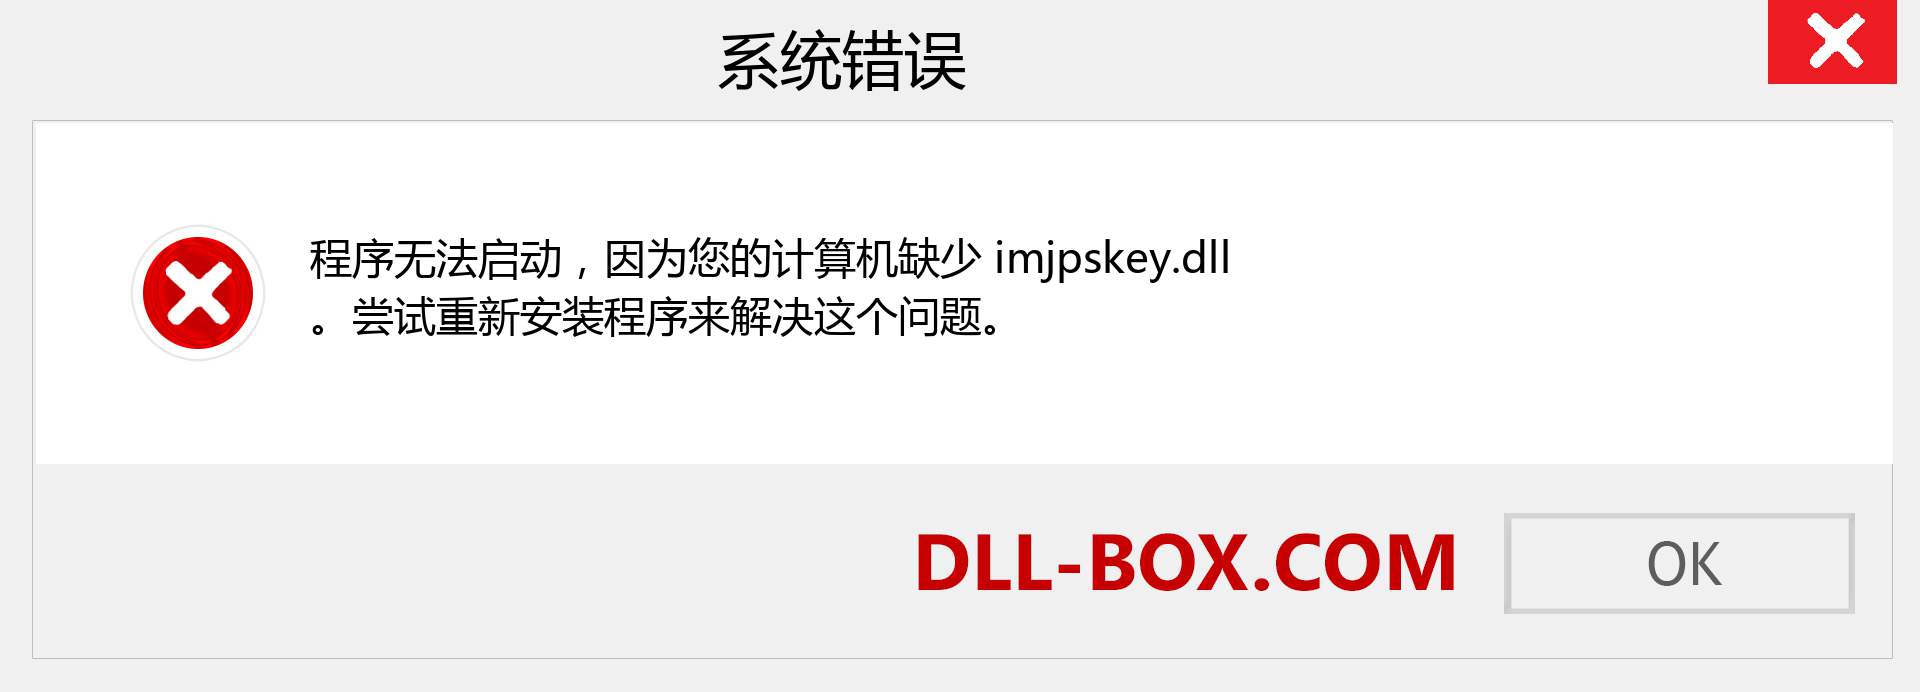 imjpskey.dll 文件丢失？。 适用于 Windows 7、8、10 的下载 - 修复 Windows、照片、图像上的 imjpskey dll 丢失错误